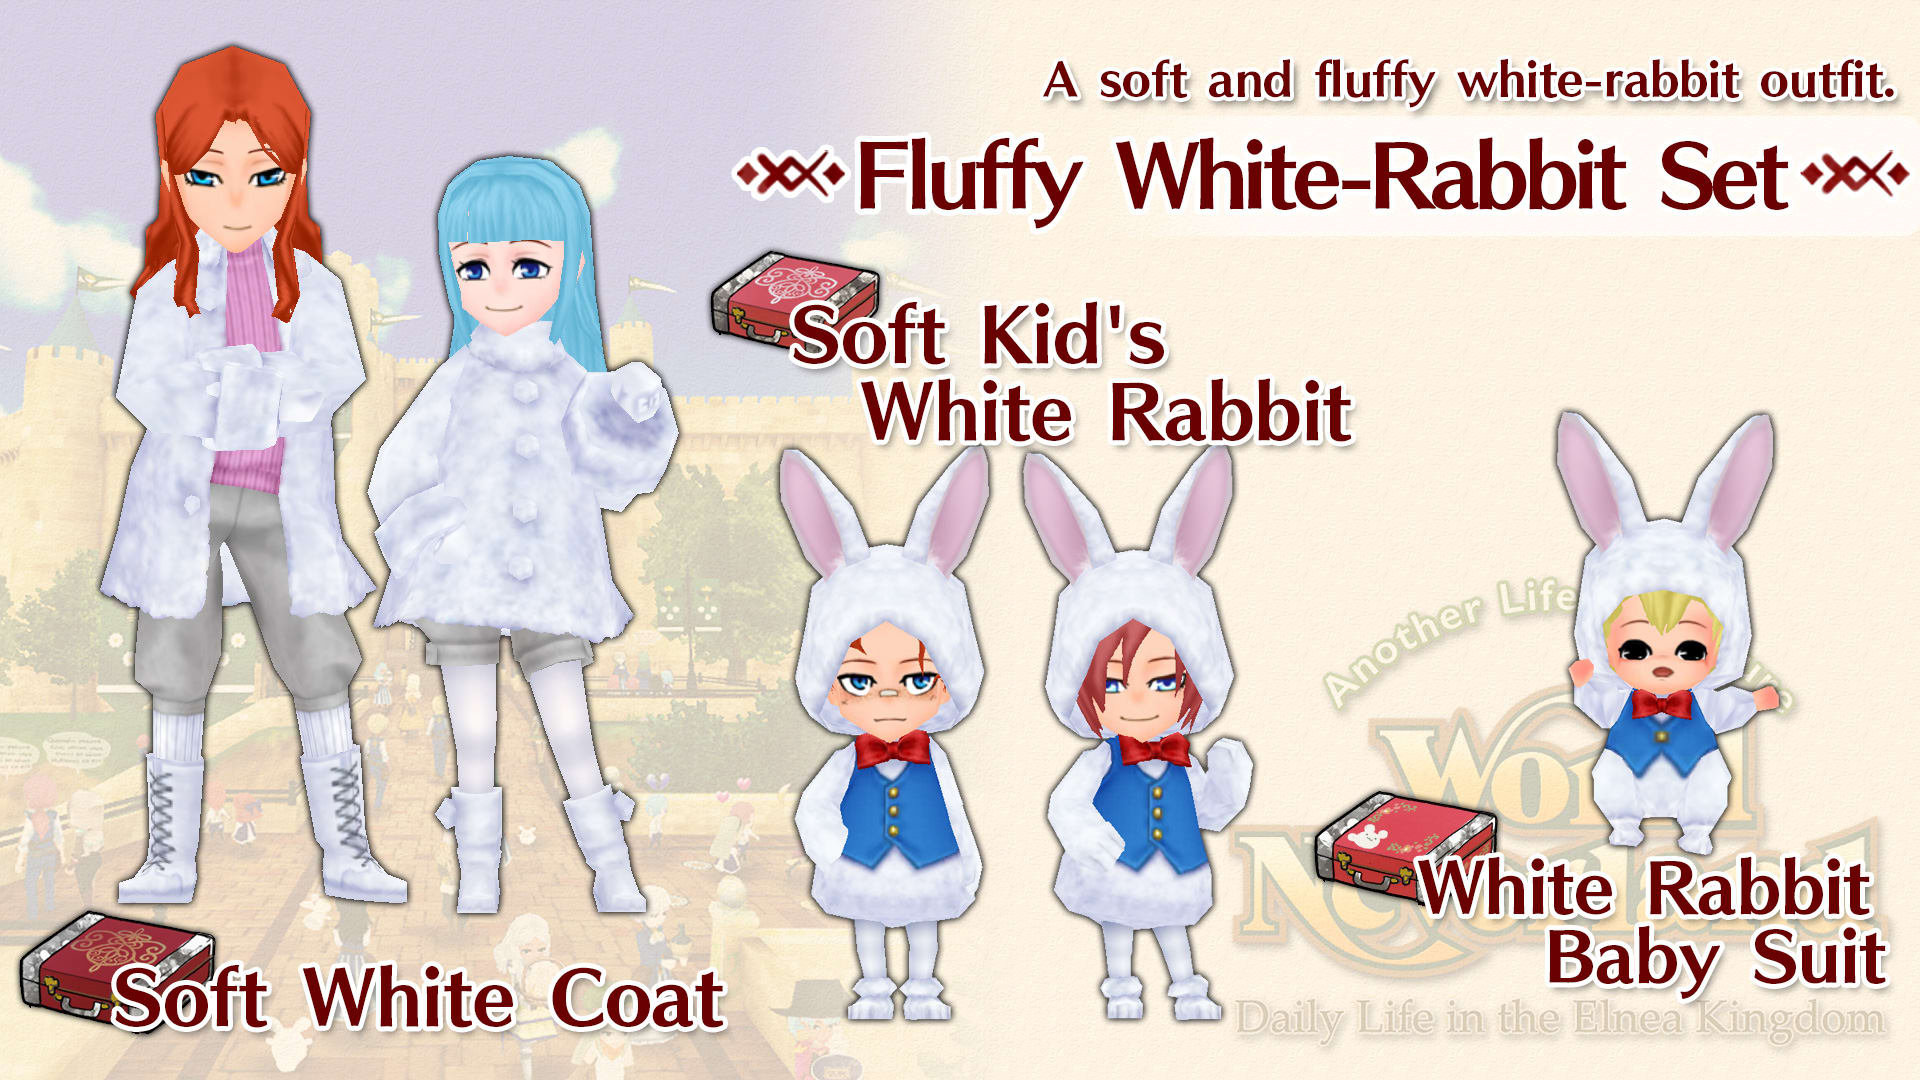 Fluffy White-Rabbit Set